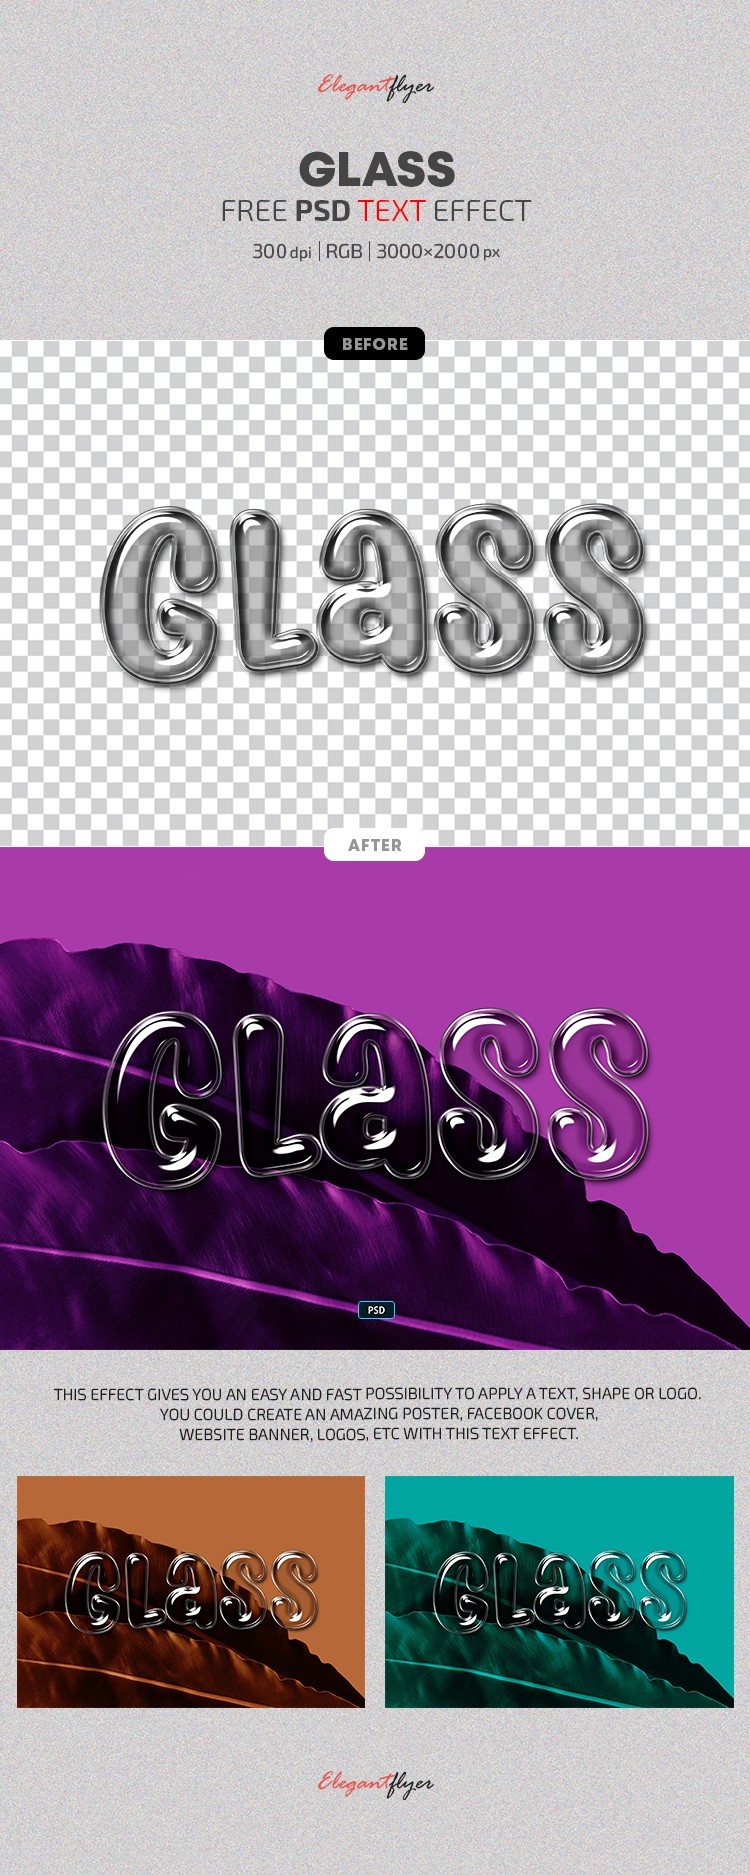 Glass Text Effect by ElegantFlyer